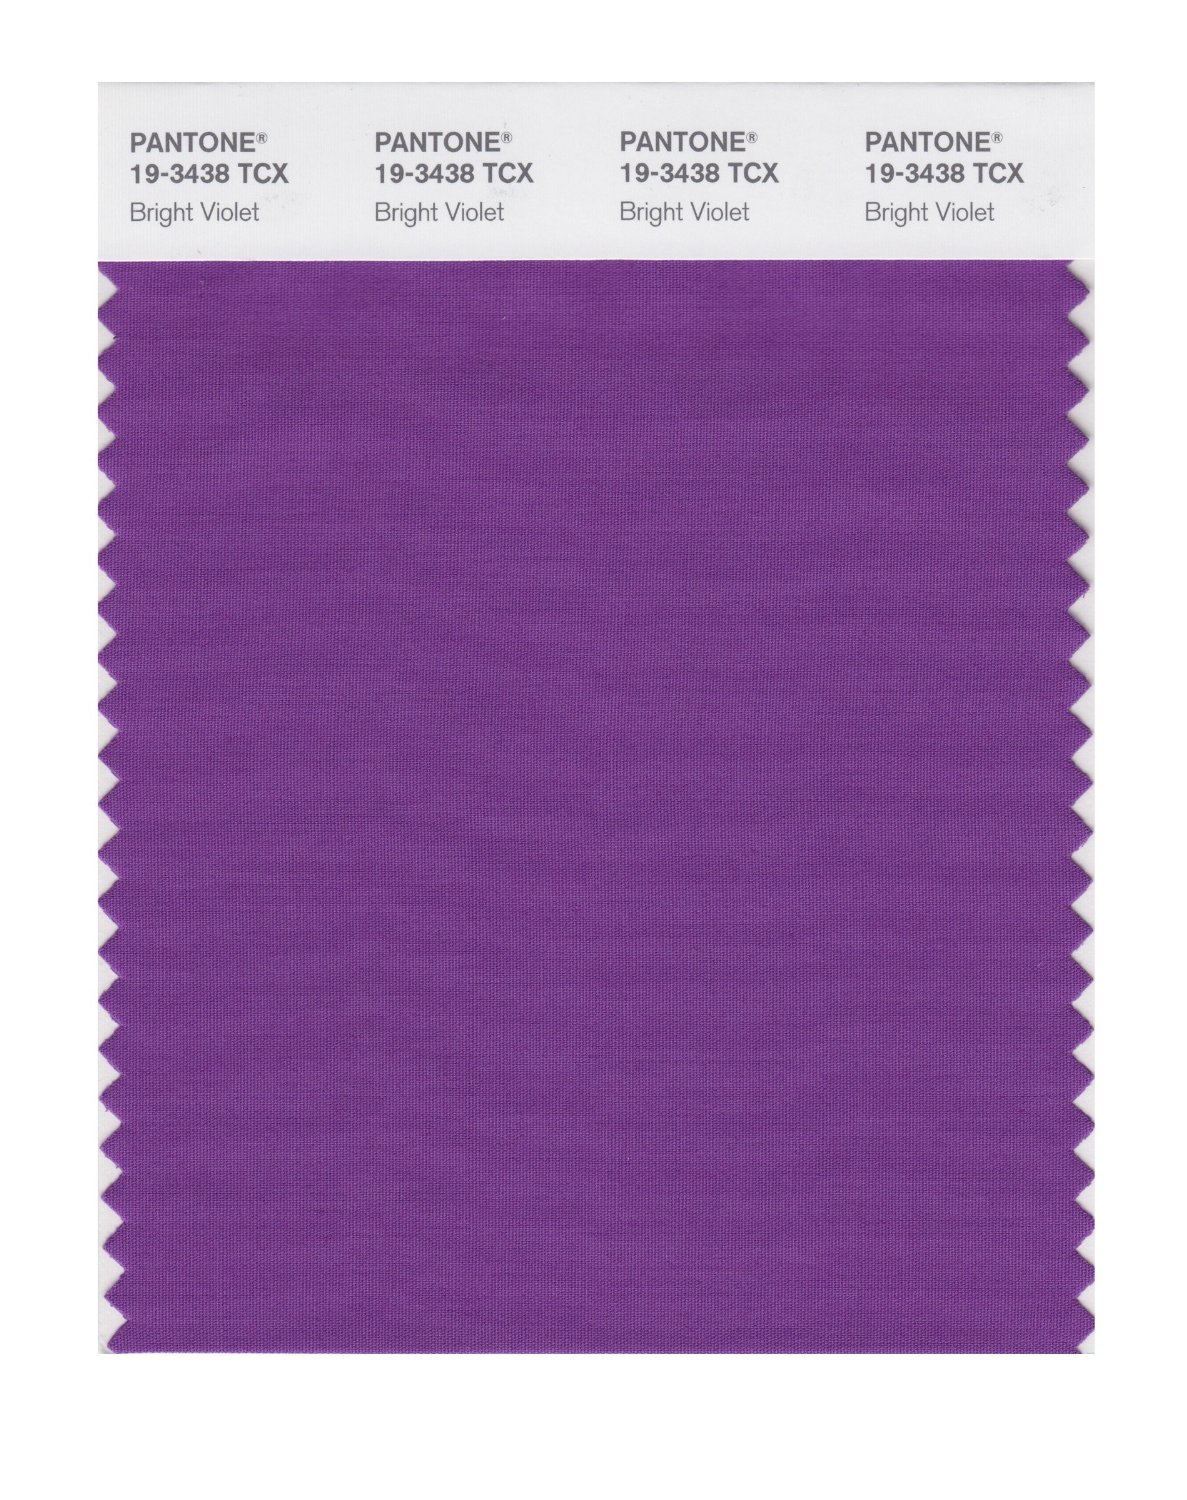 Pantone Cotton Swatch 19-3438 Bright Violet